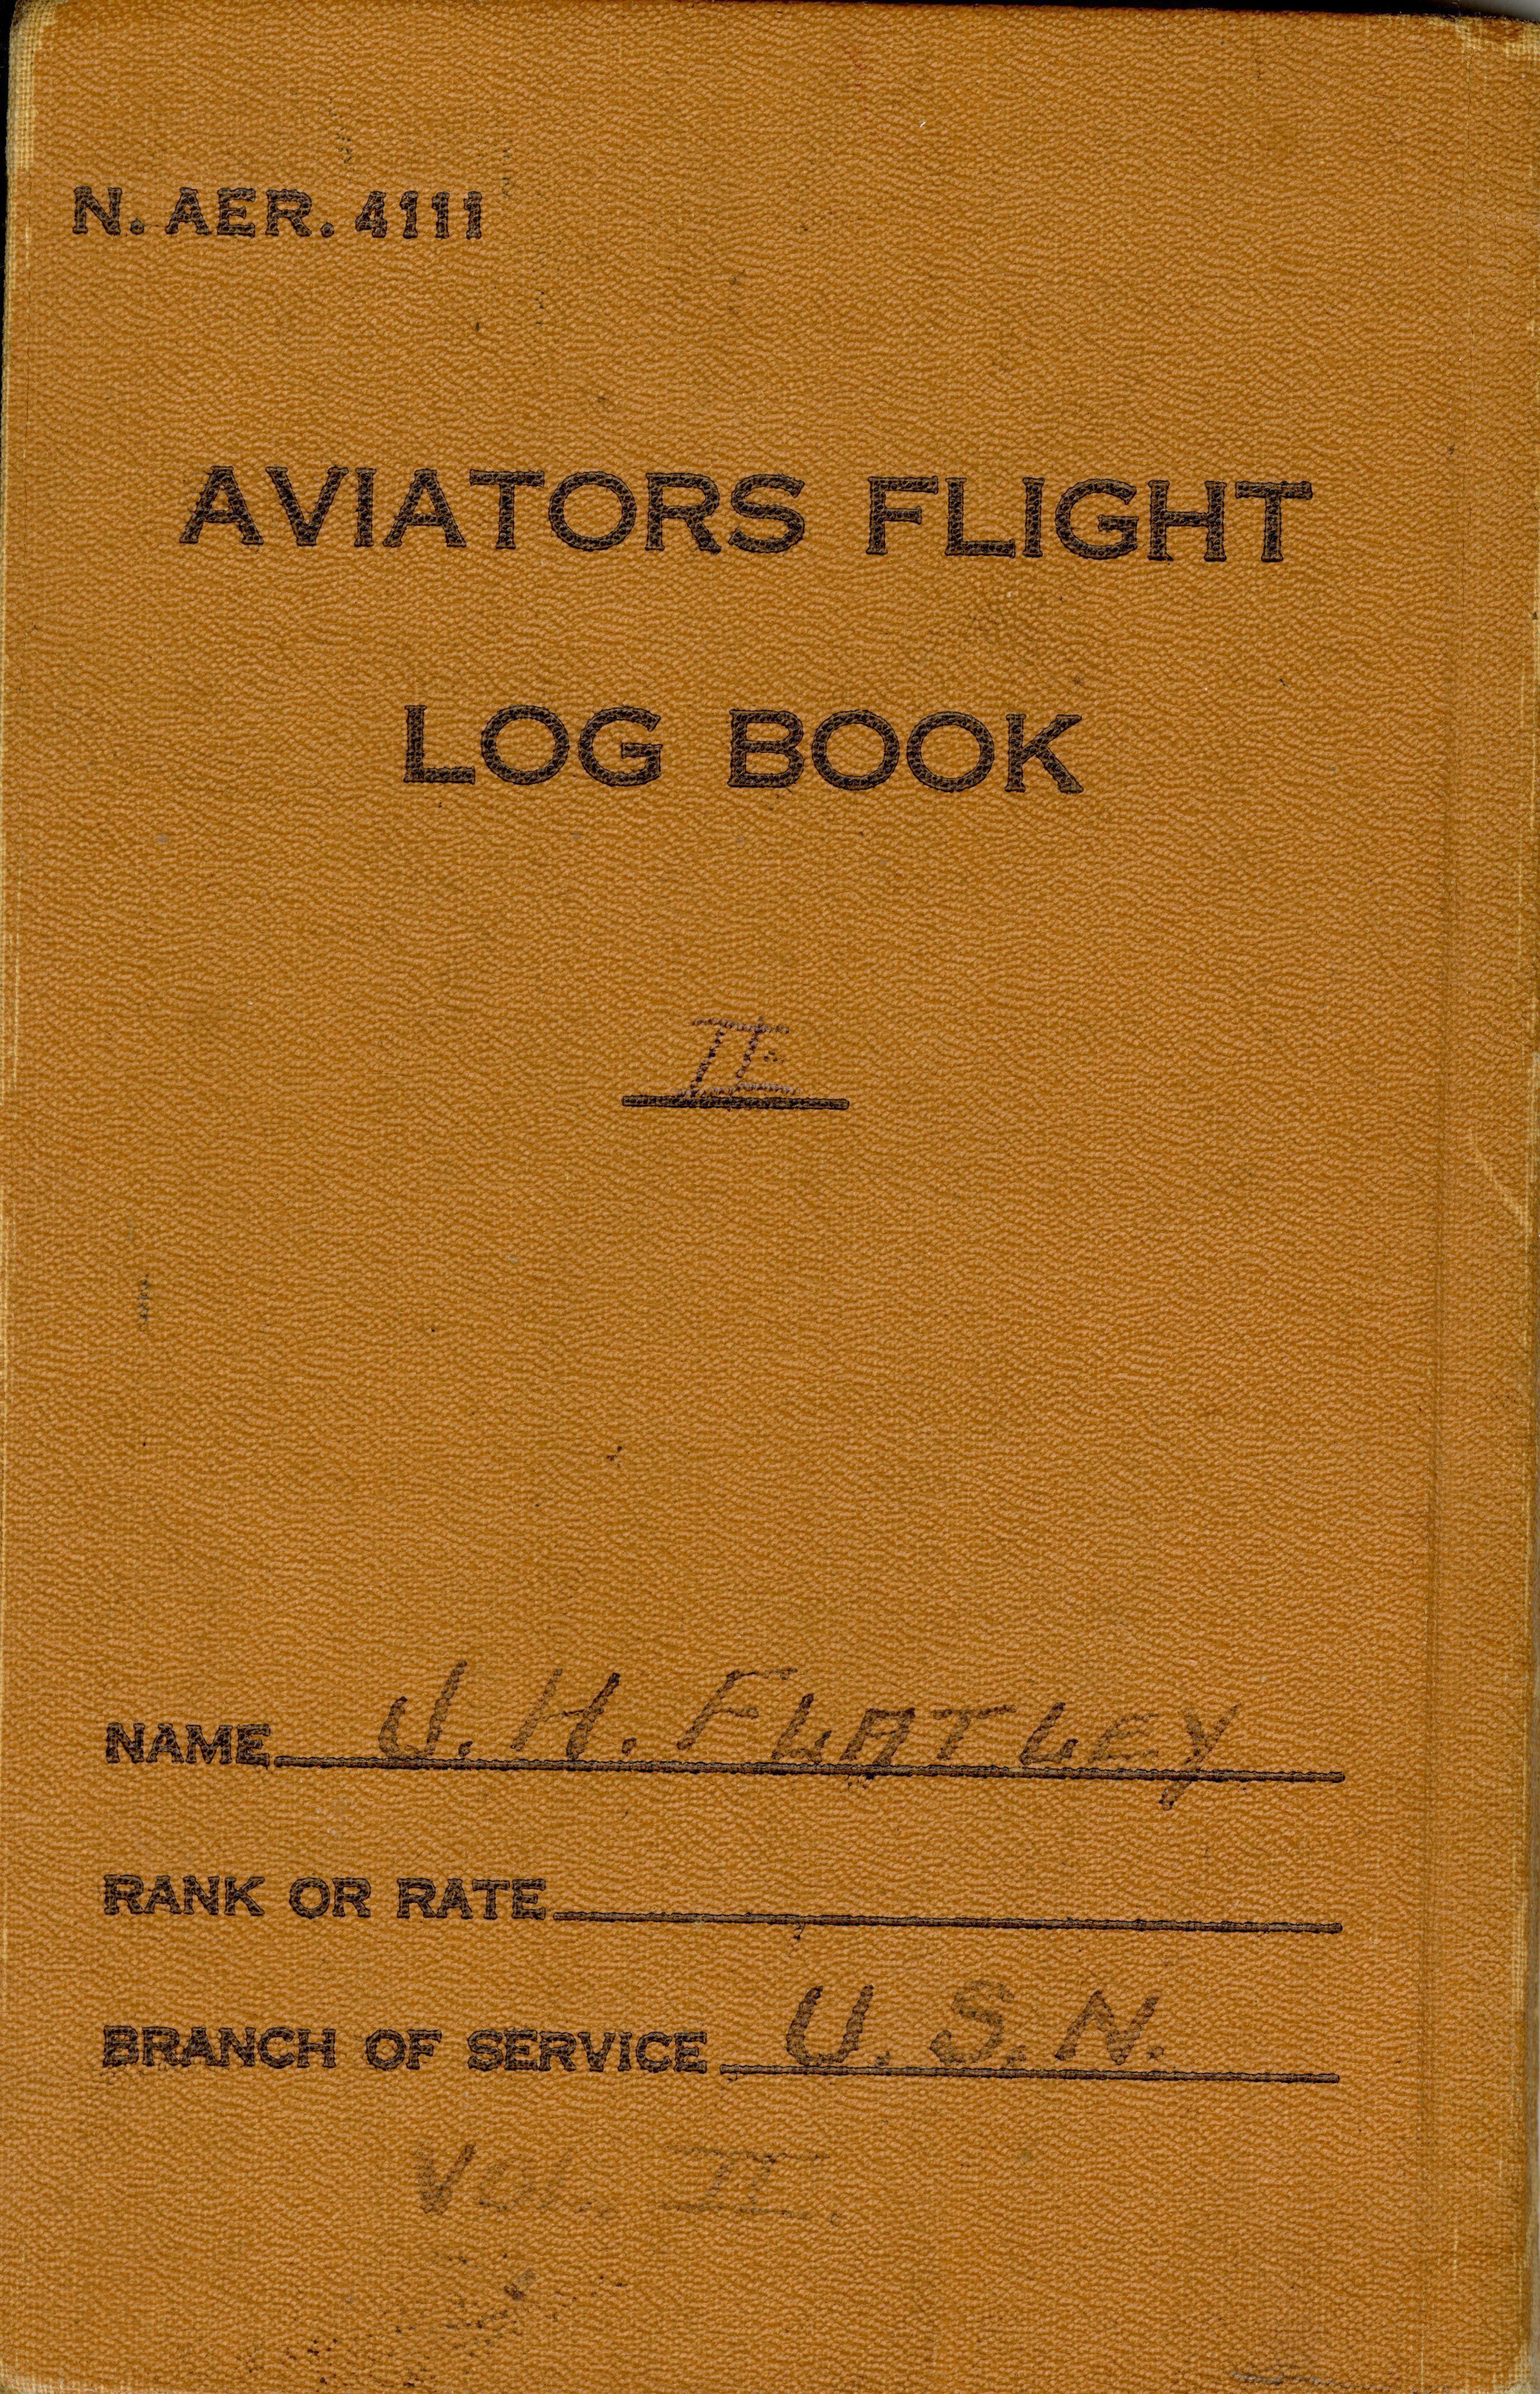 Primary Image of Aviators Flight Log Book (1932-1934) of James H. Flatley, Jr.